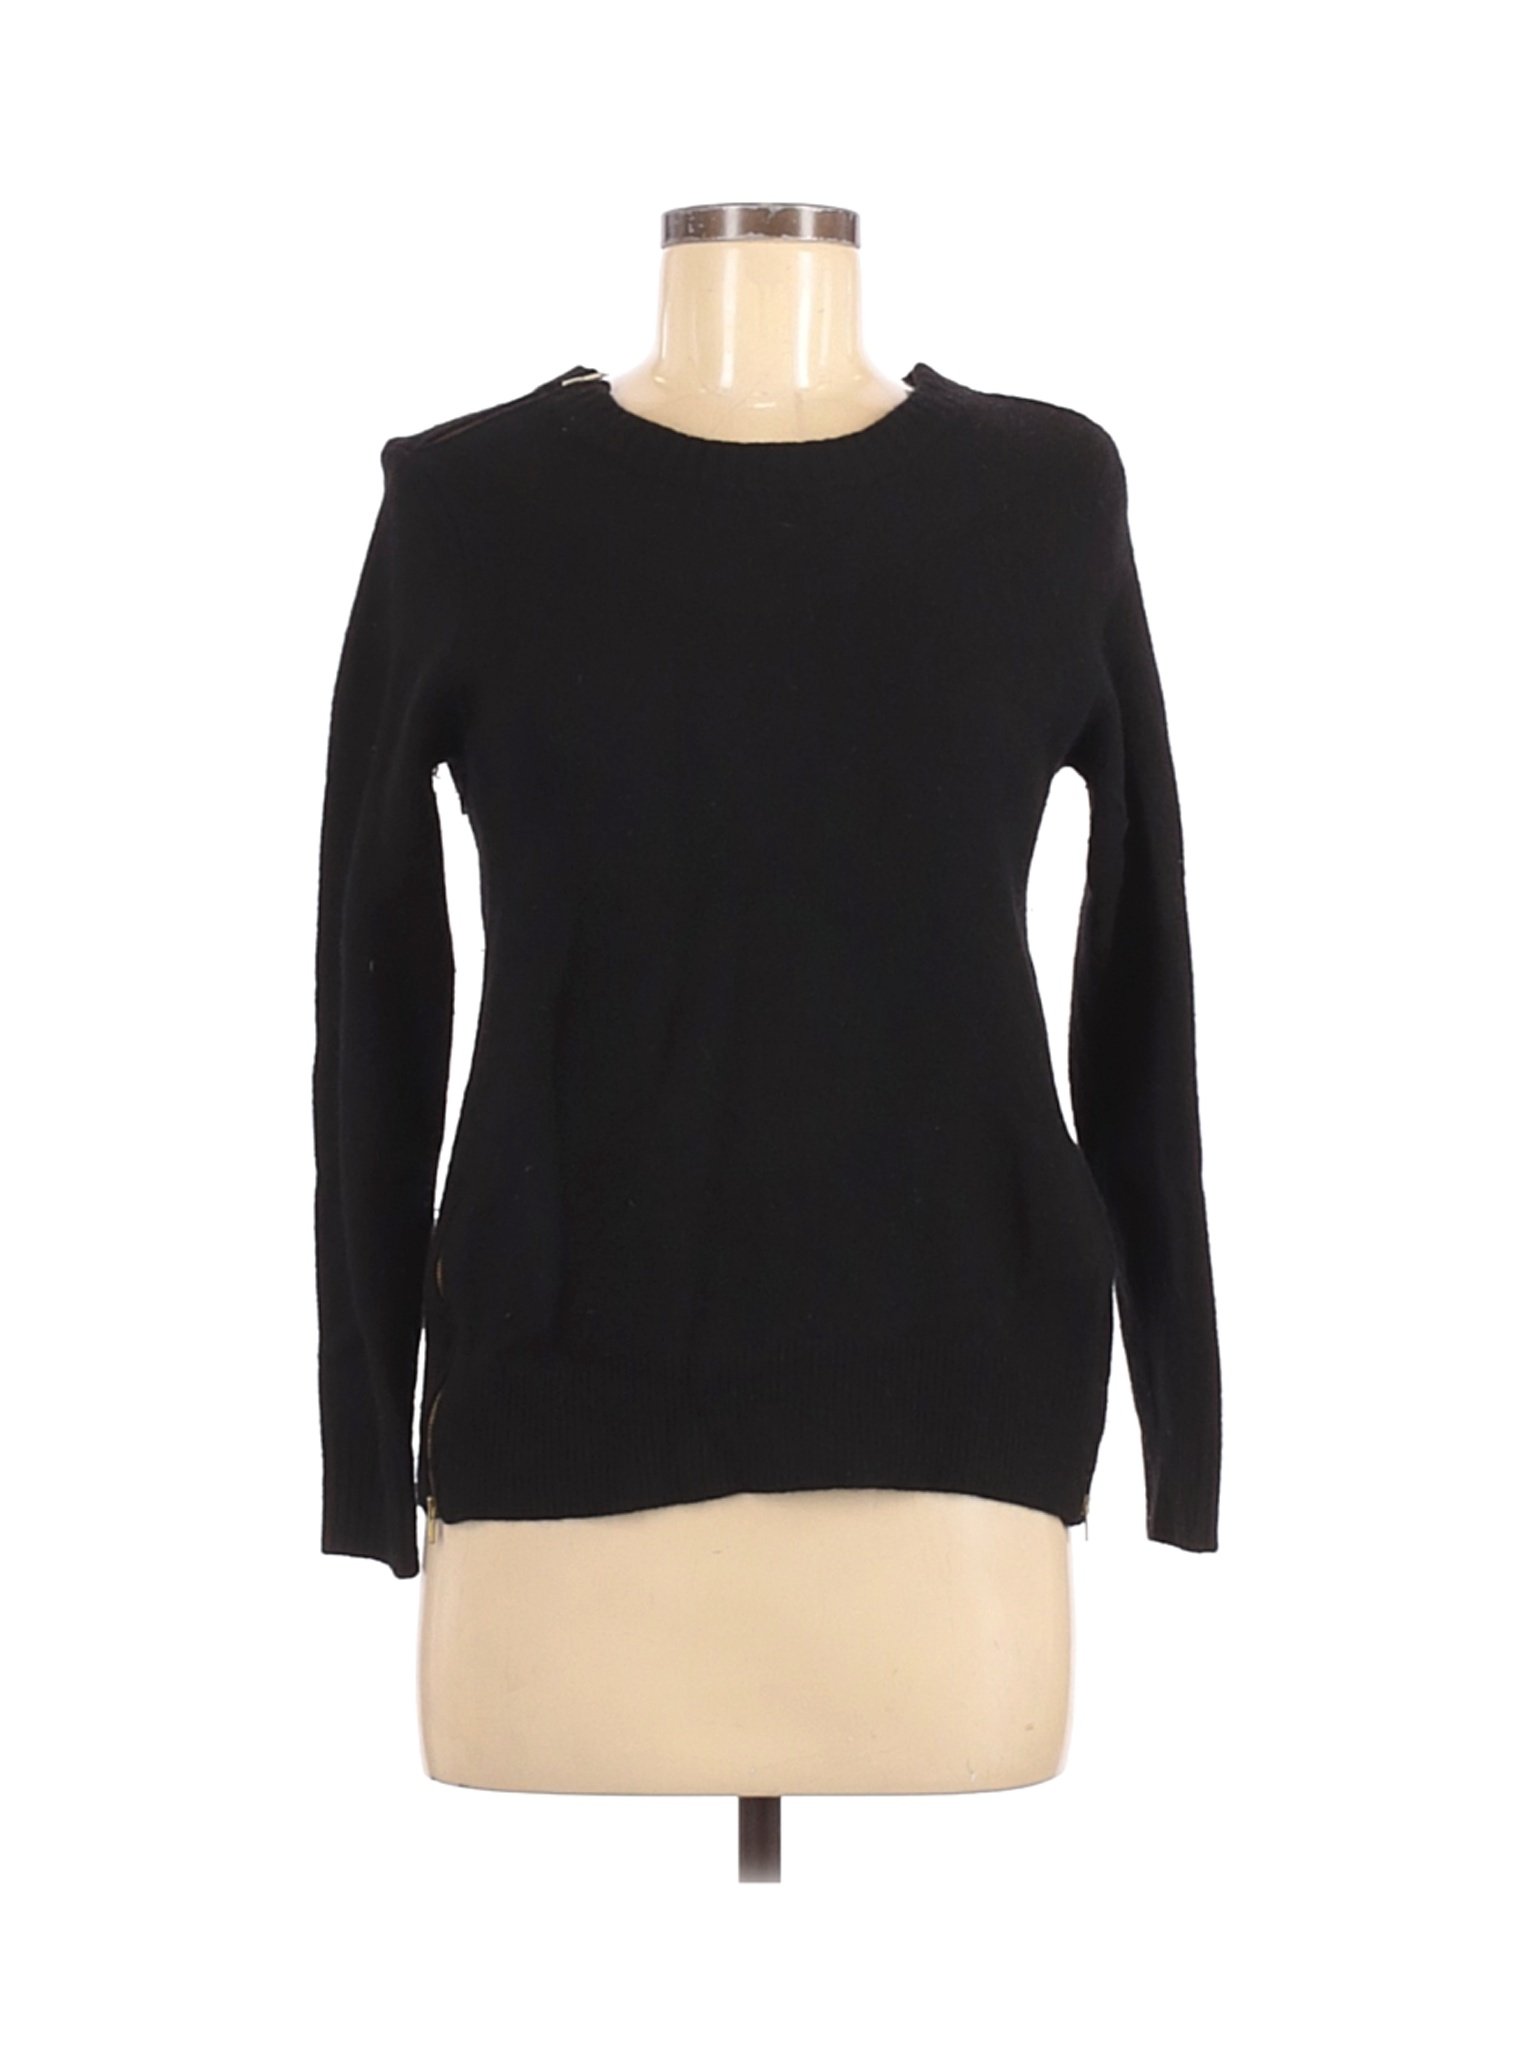 J.Crew Women Black Wool Pullover Sweater M | eBay